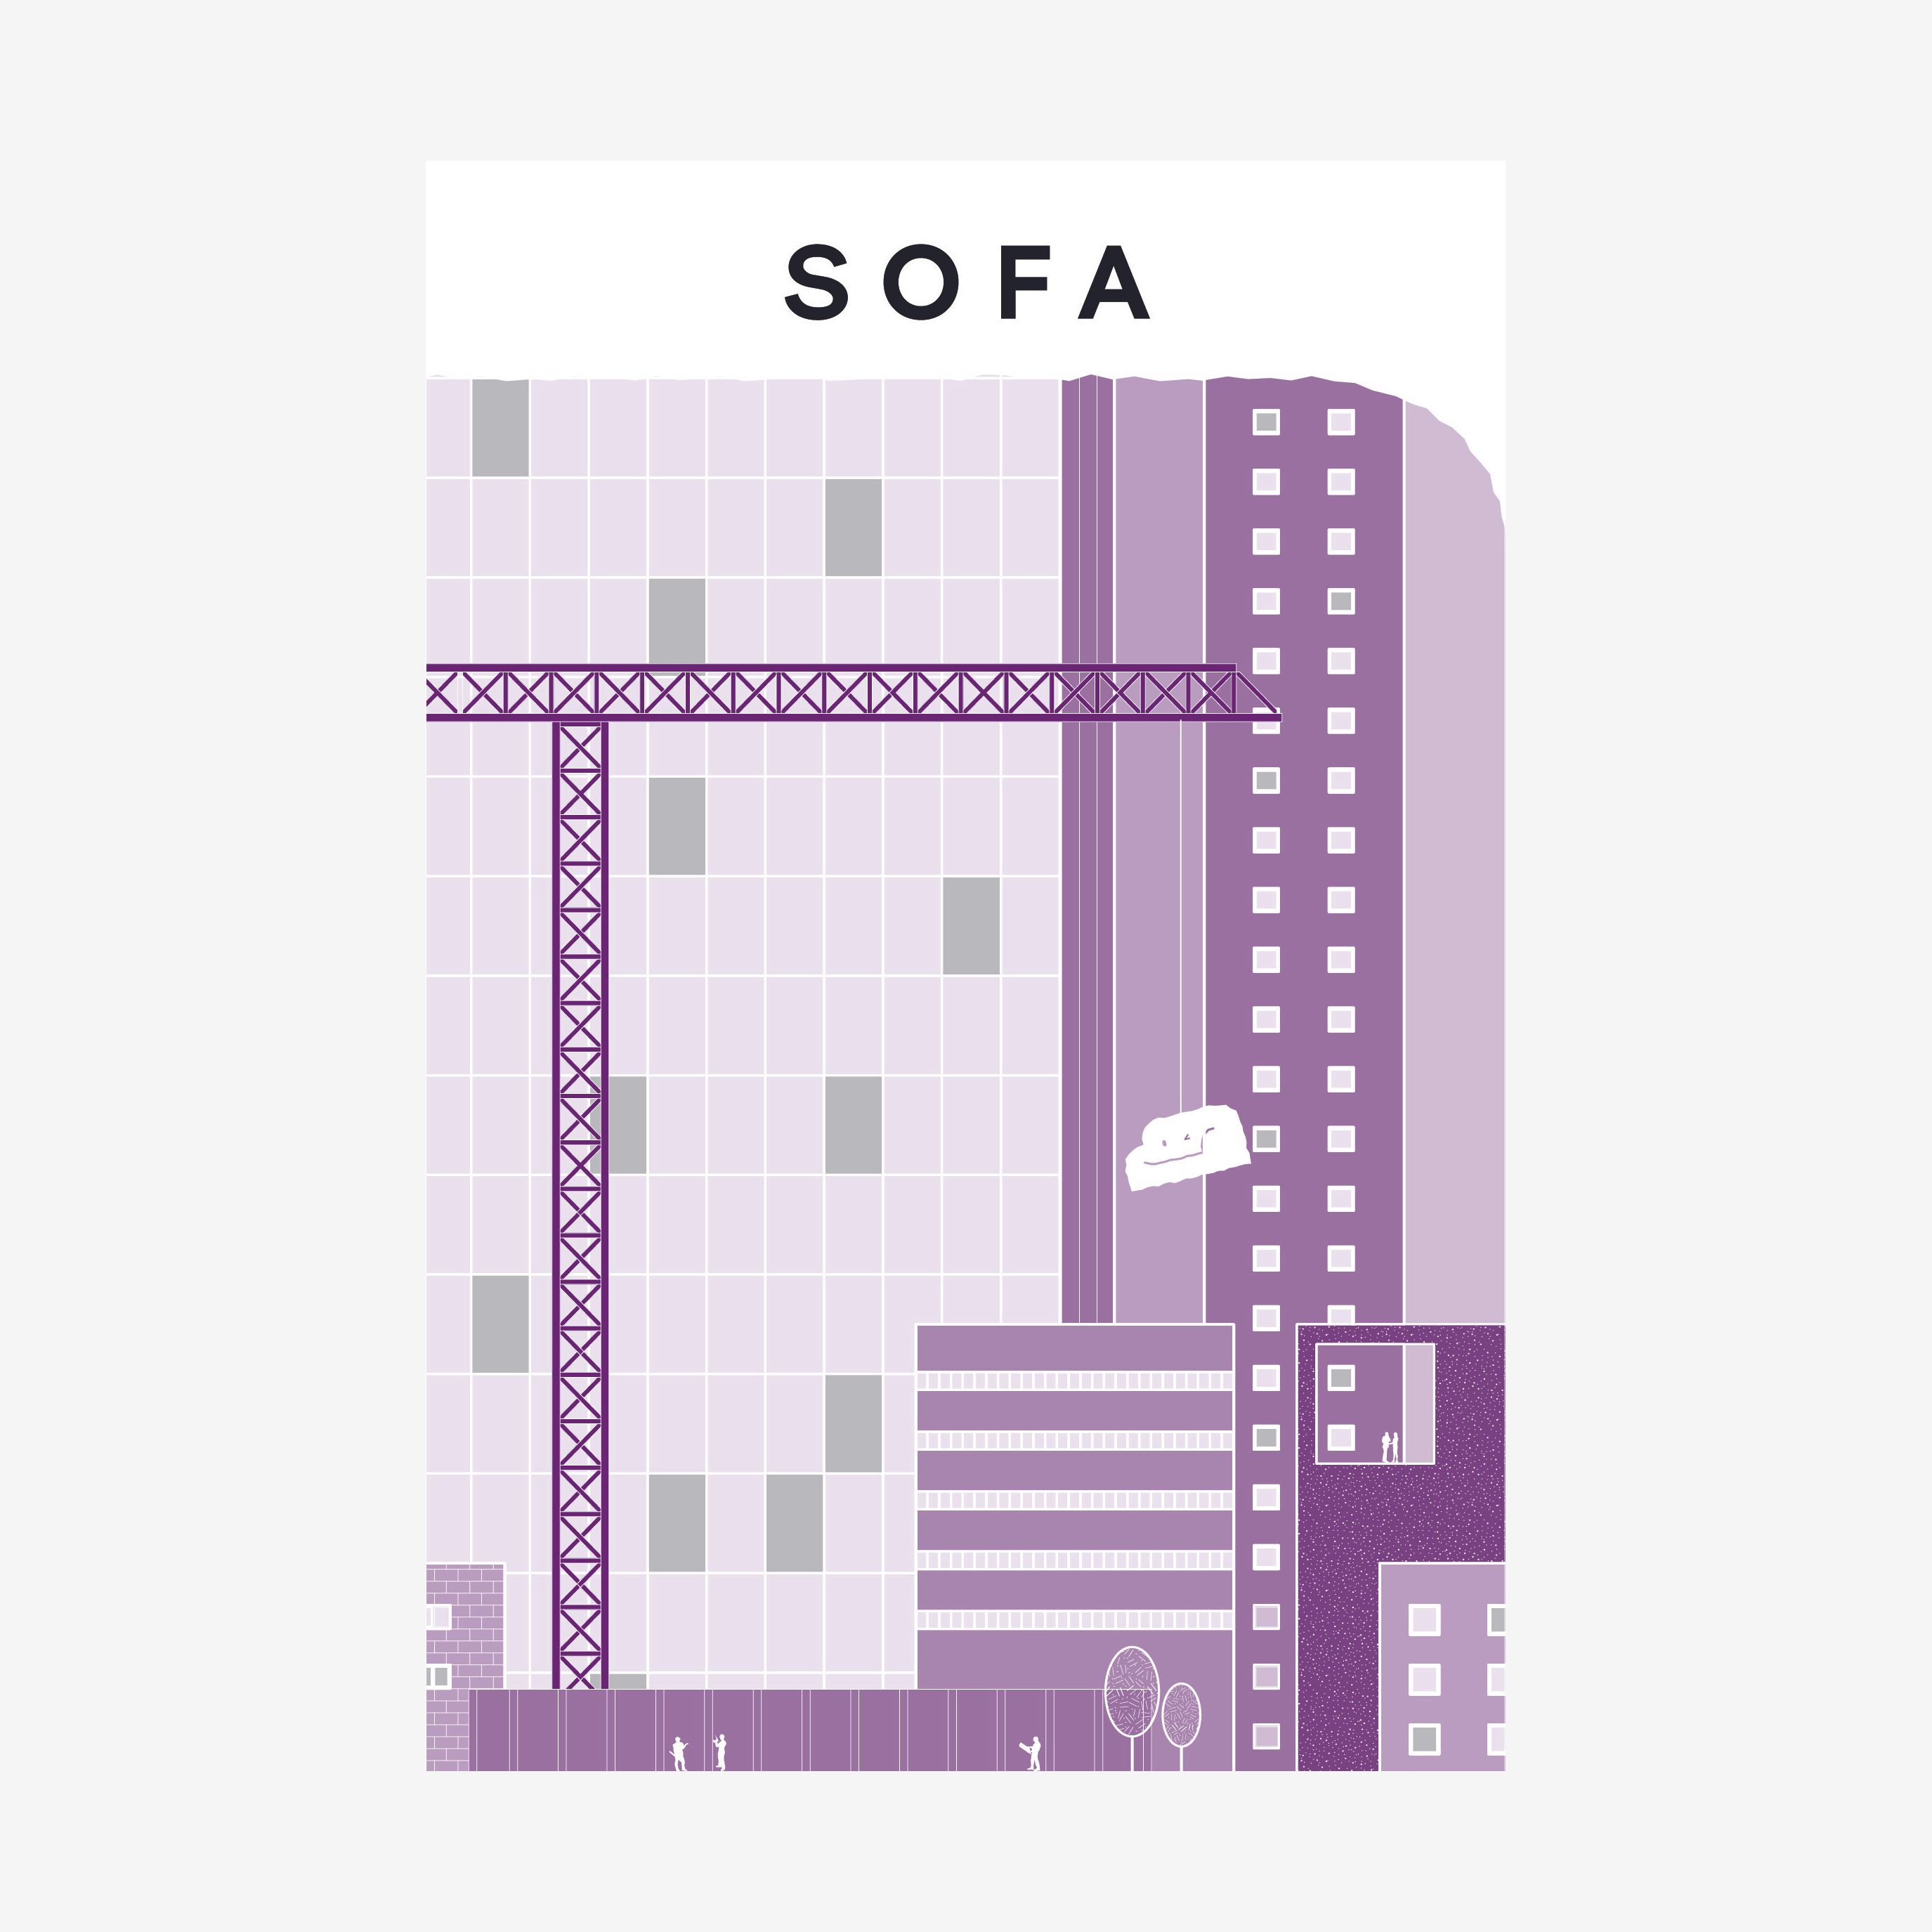 SOFA3 건물이 지어지는 과정X준공마블